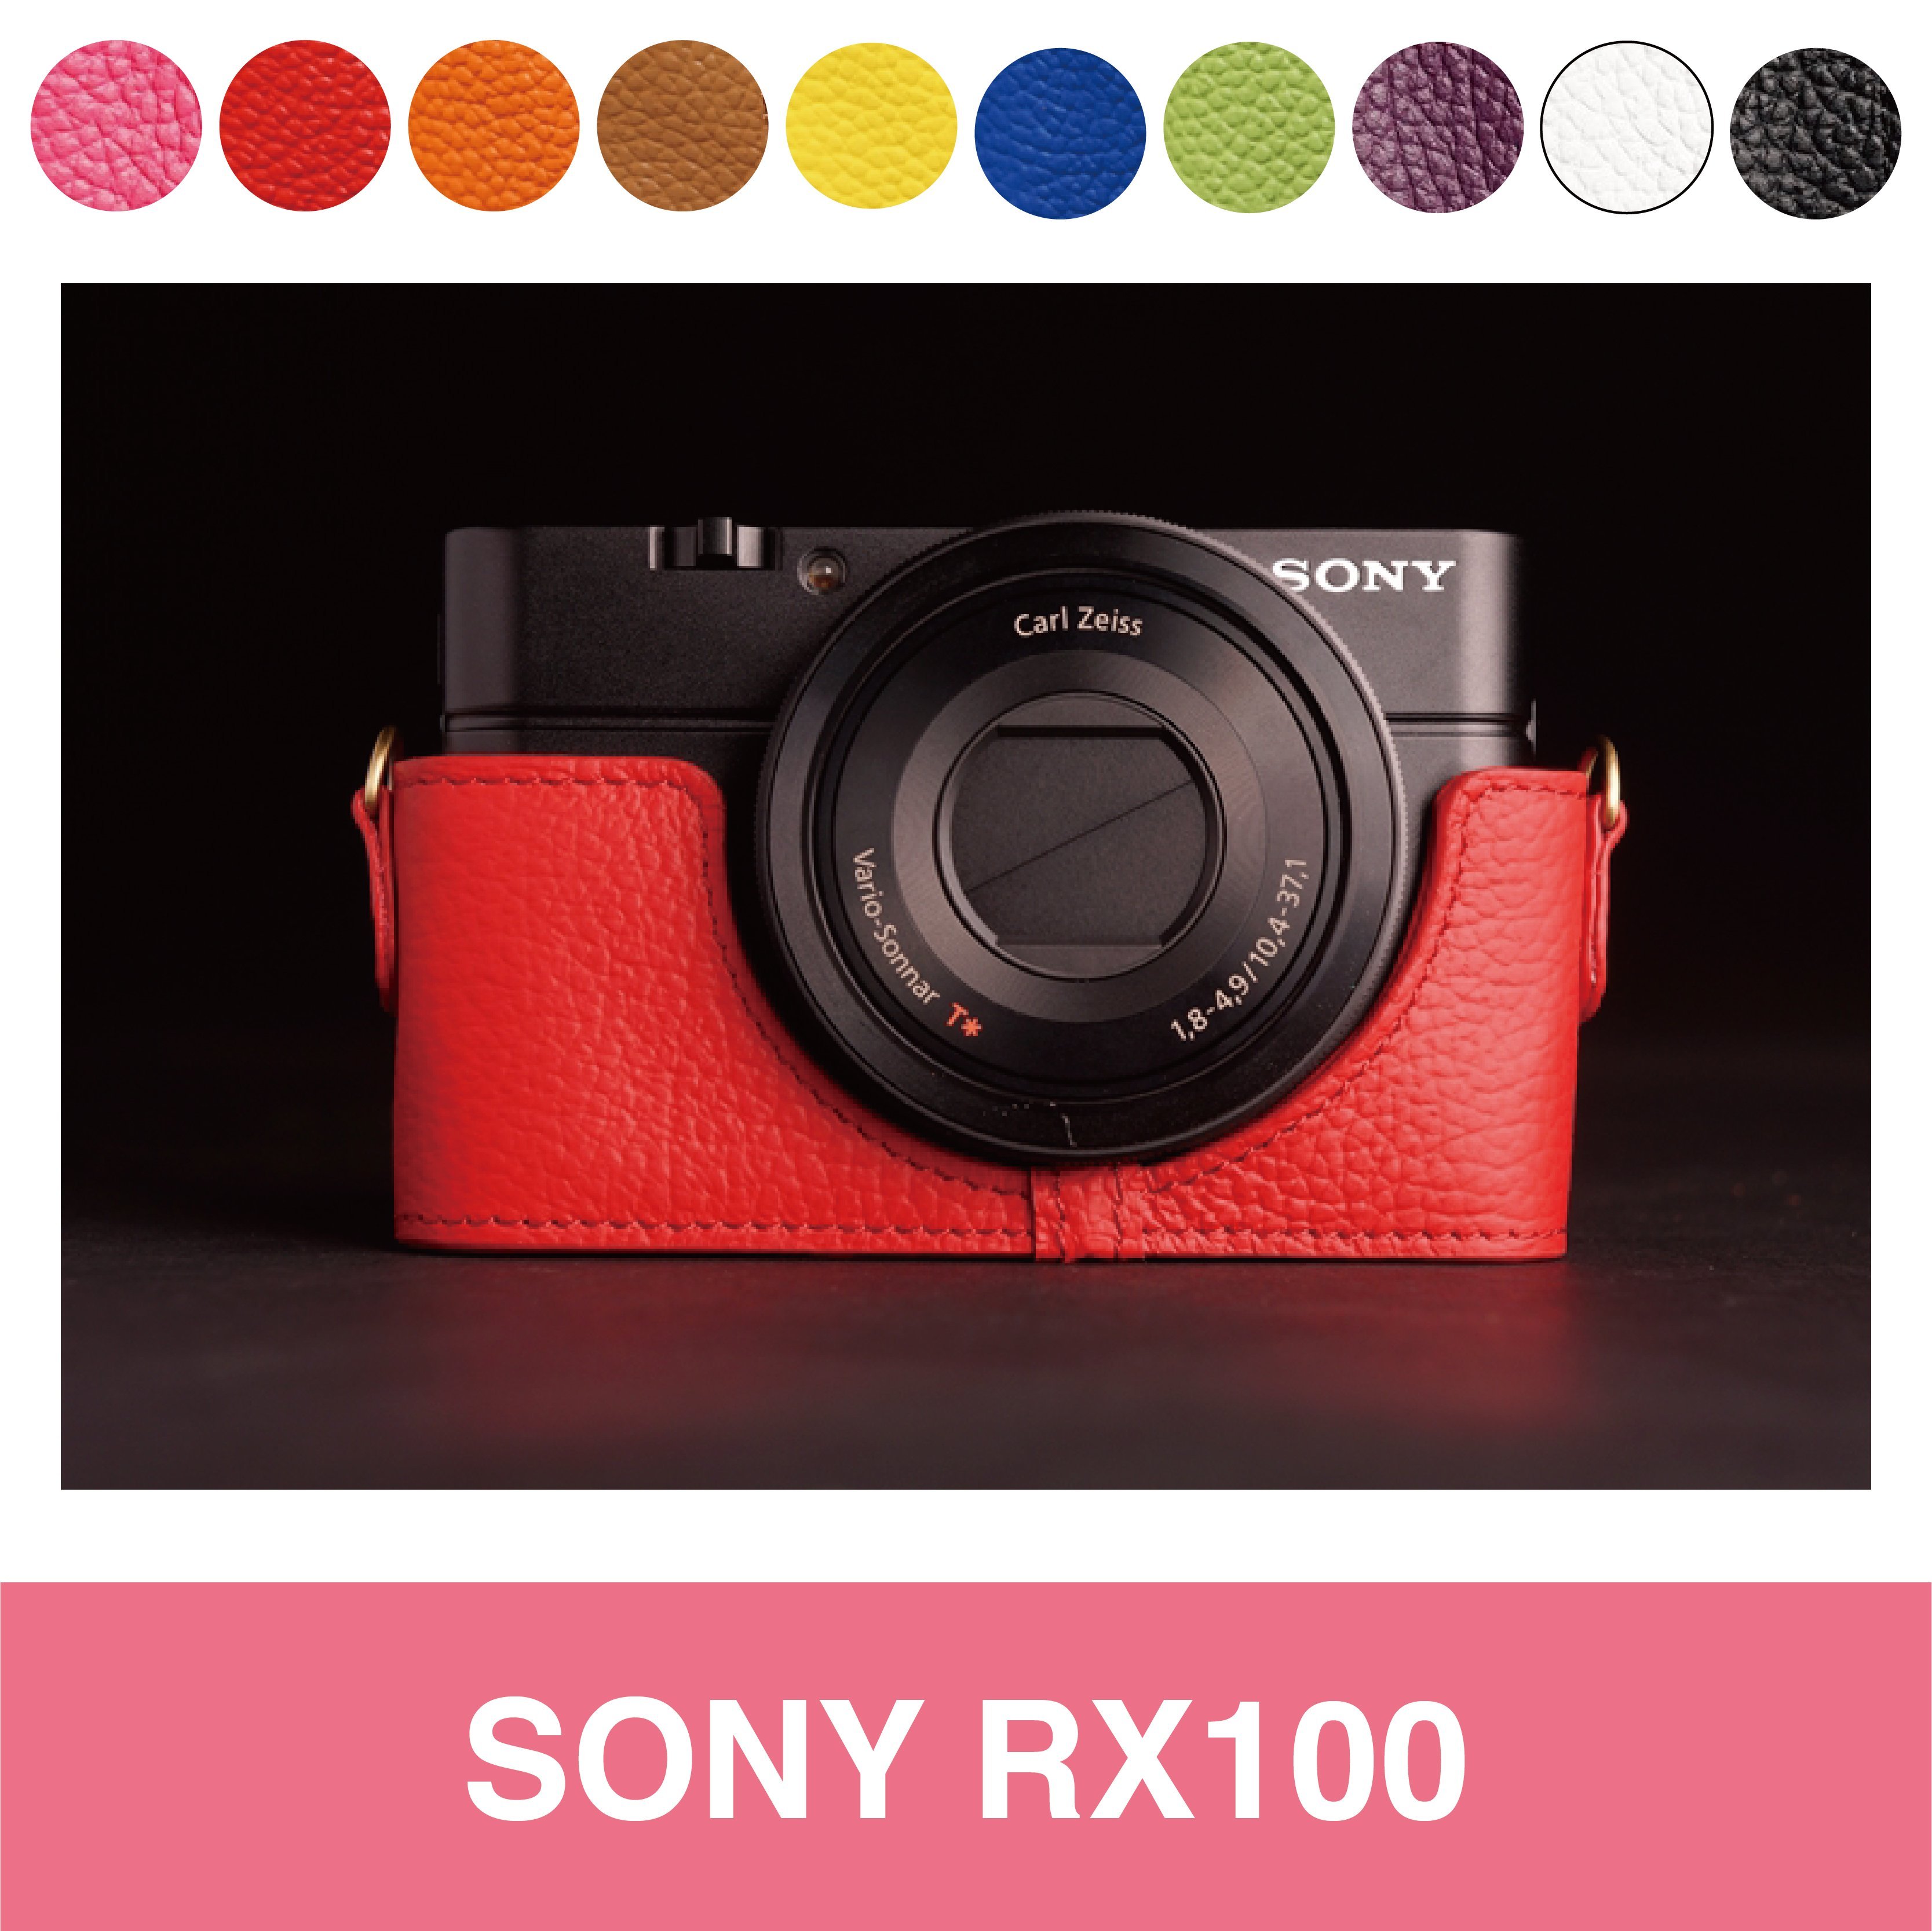 TP-RX100 SONY 設計師款 秀系列 相機包 超越原廠真皮相機底座 皮套 新色亮麗上市!